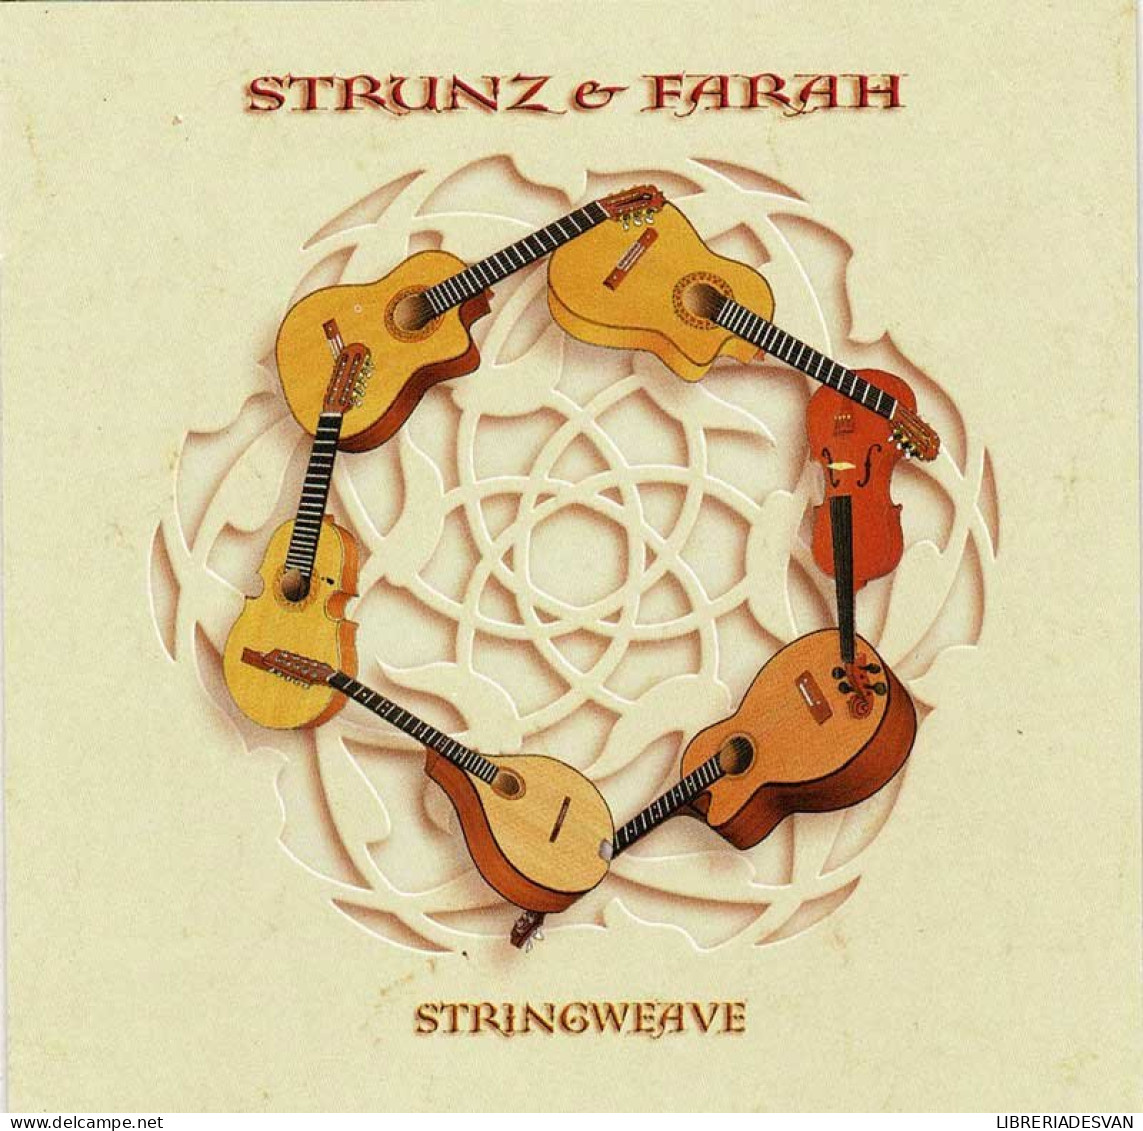 Strunz & Farah - Stringwave. CD - Other - Spanish Music